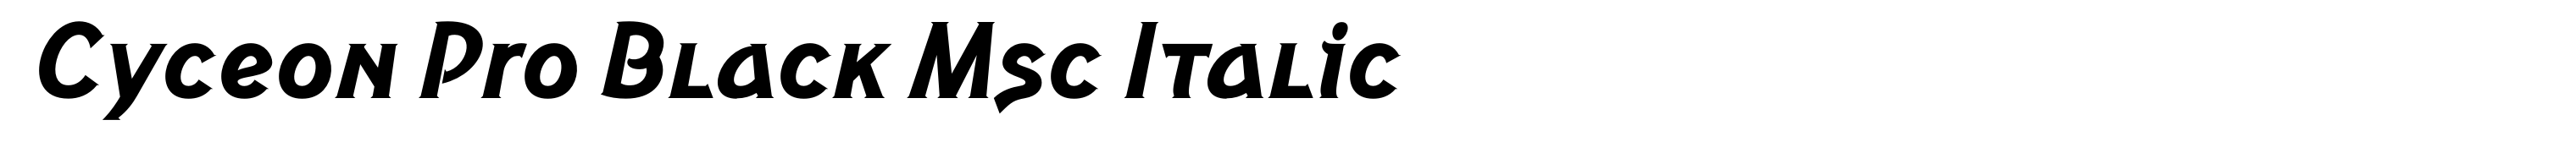 Cyceon Pro Black Msc Italic